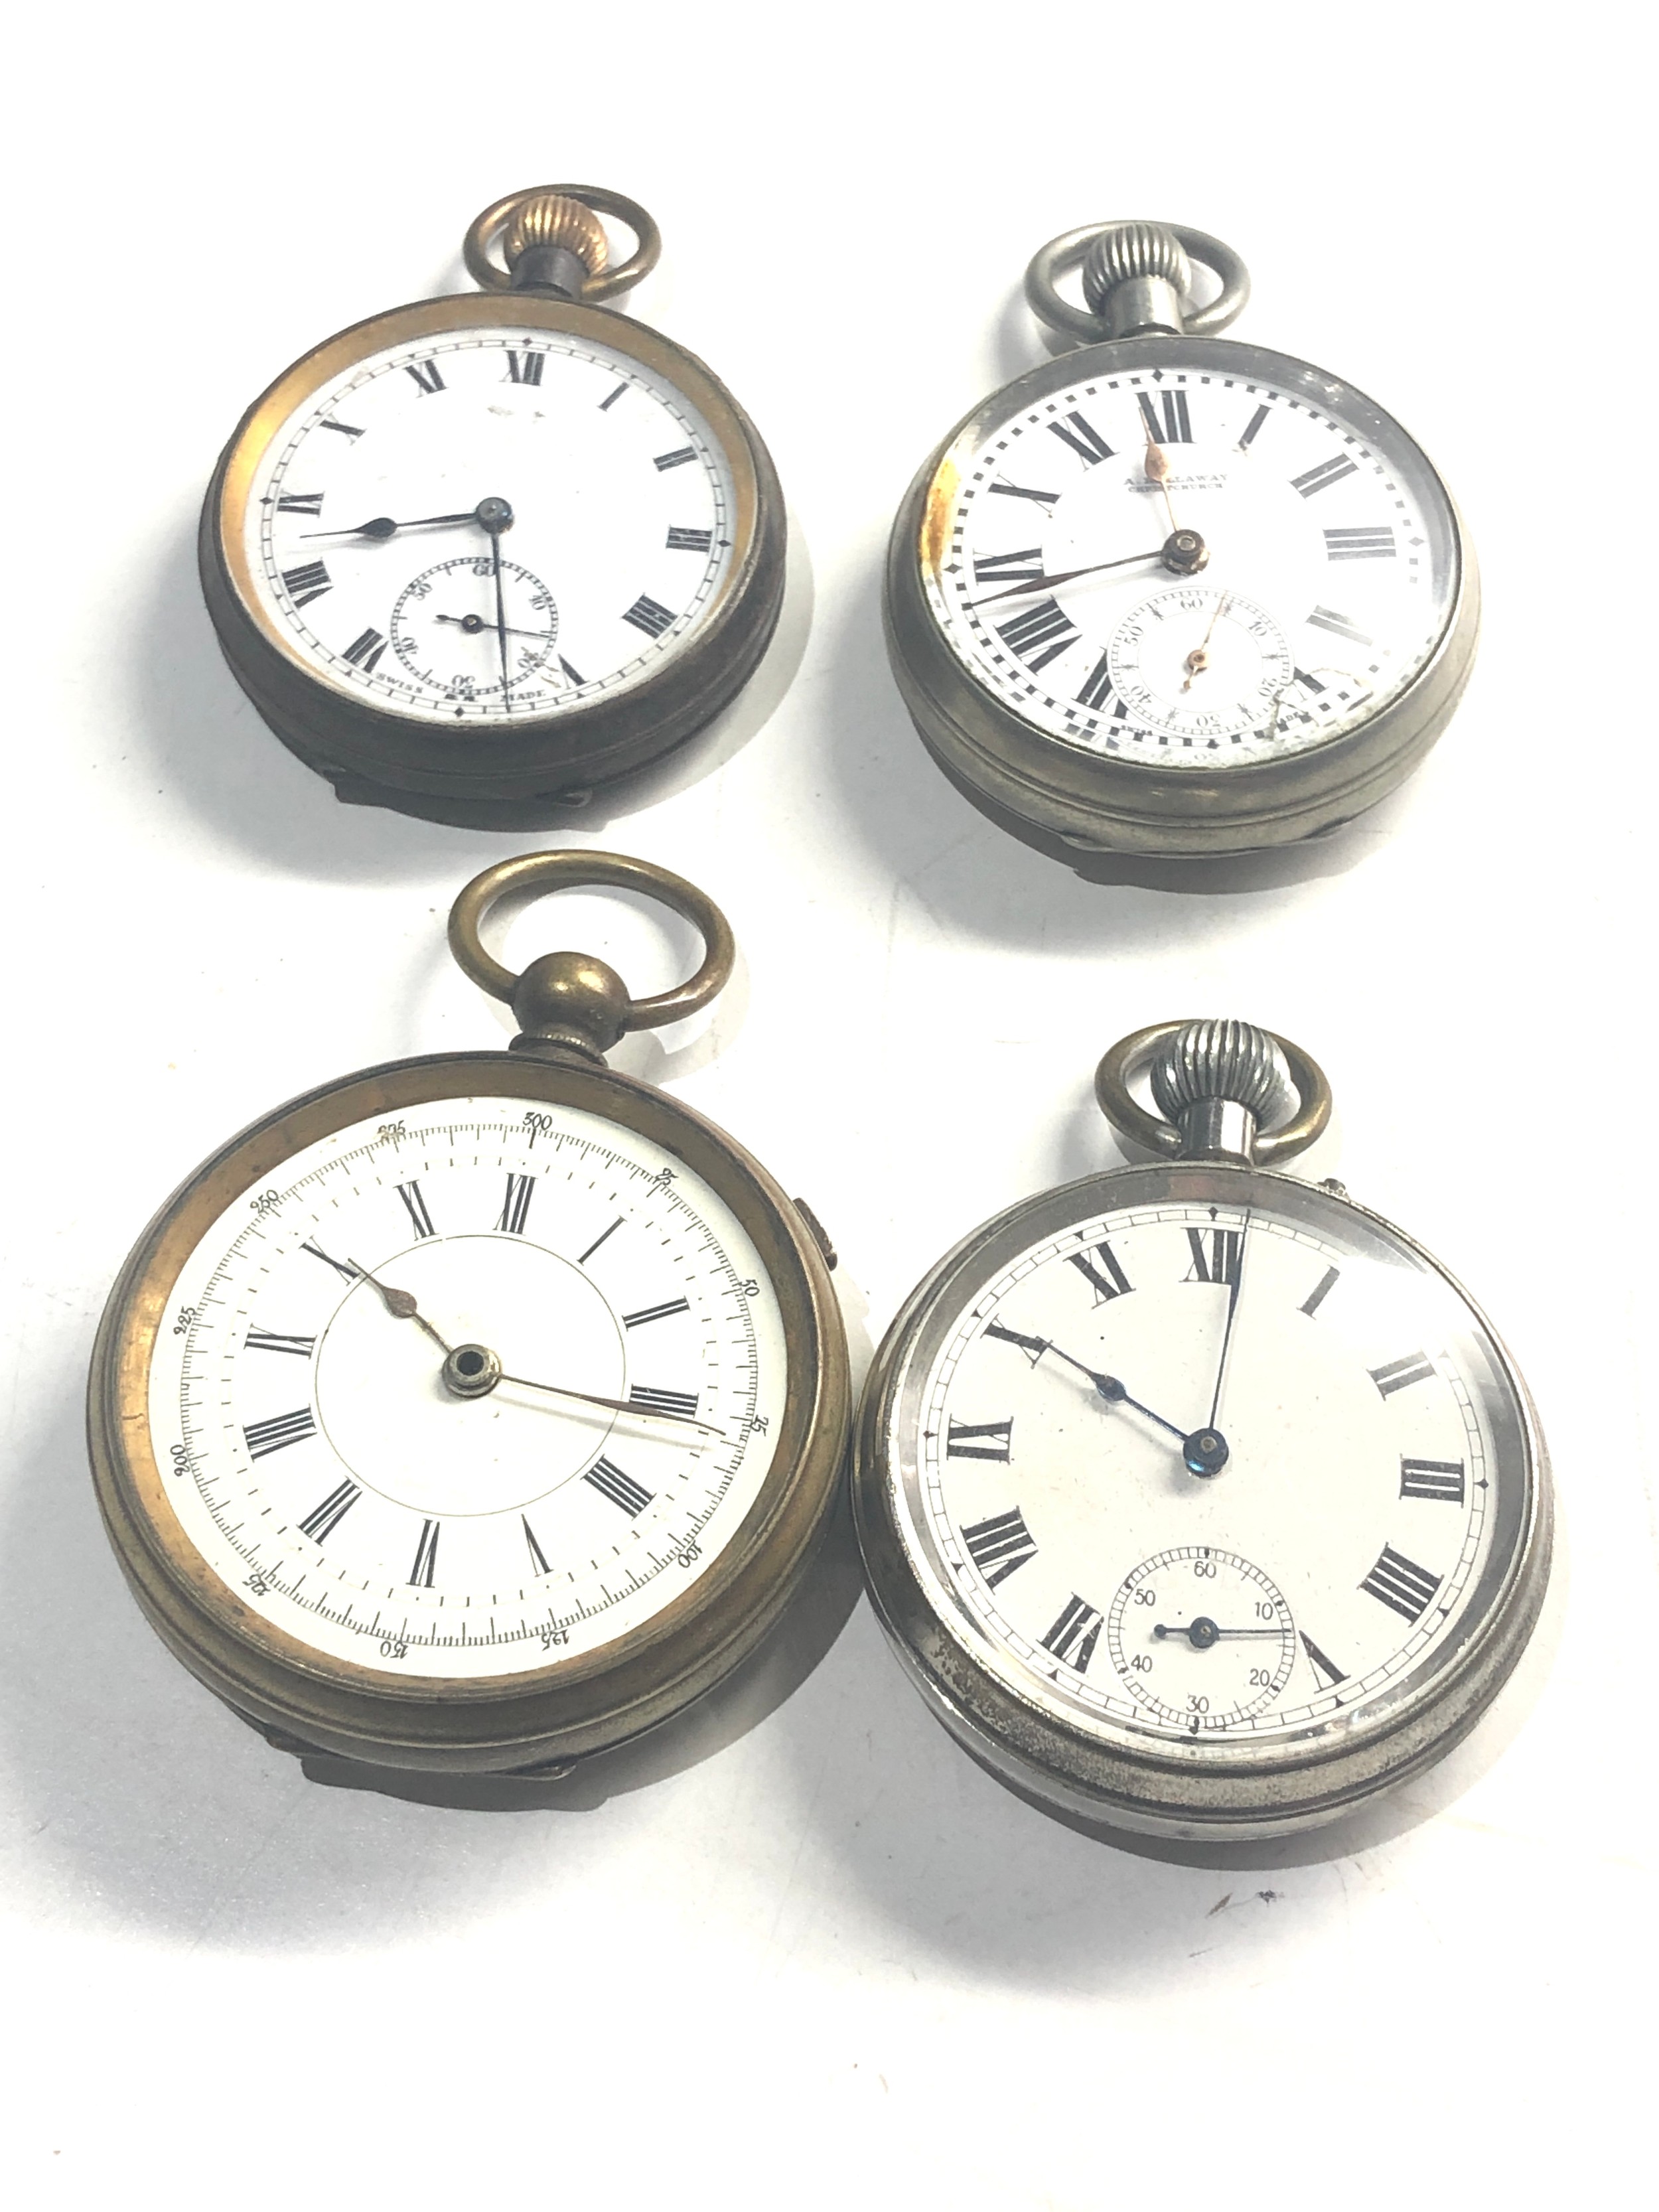 4 antique pocket watches